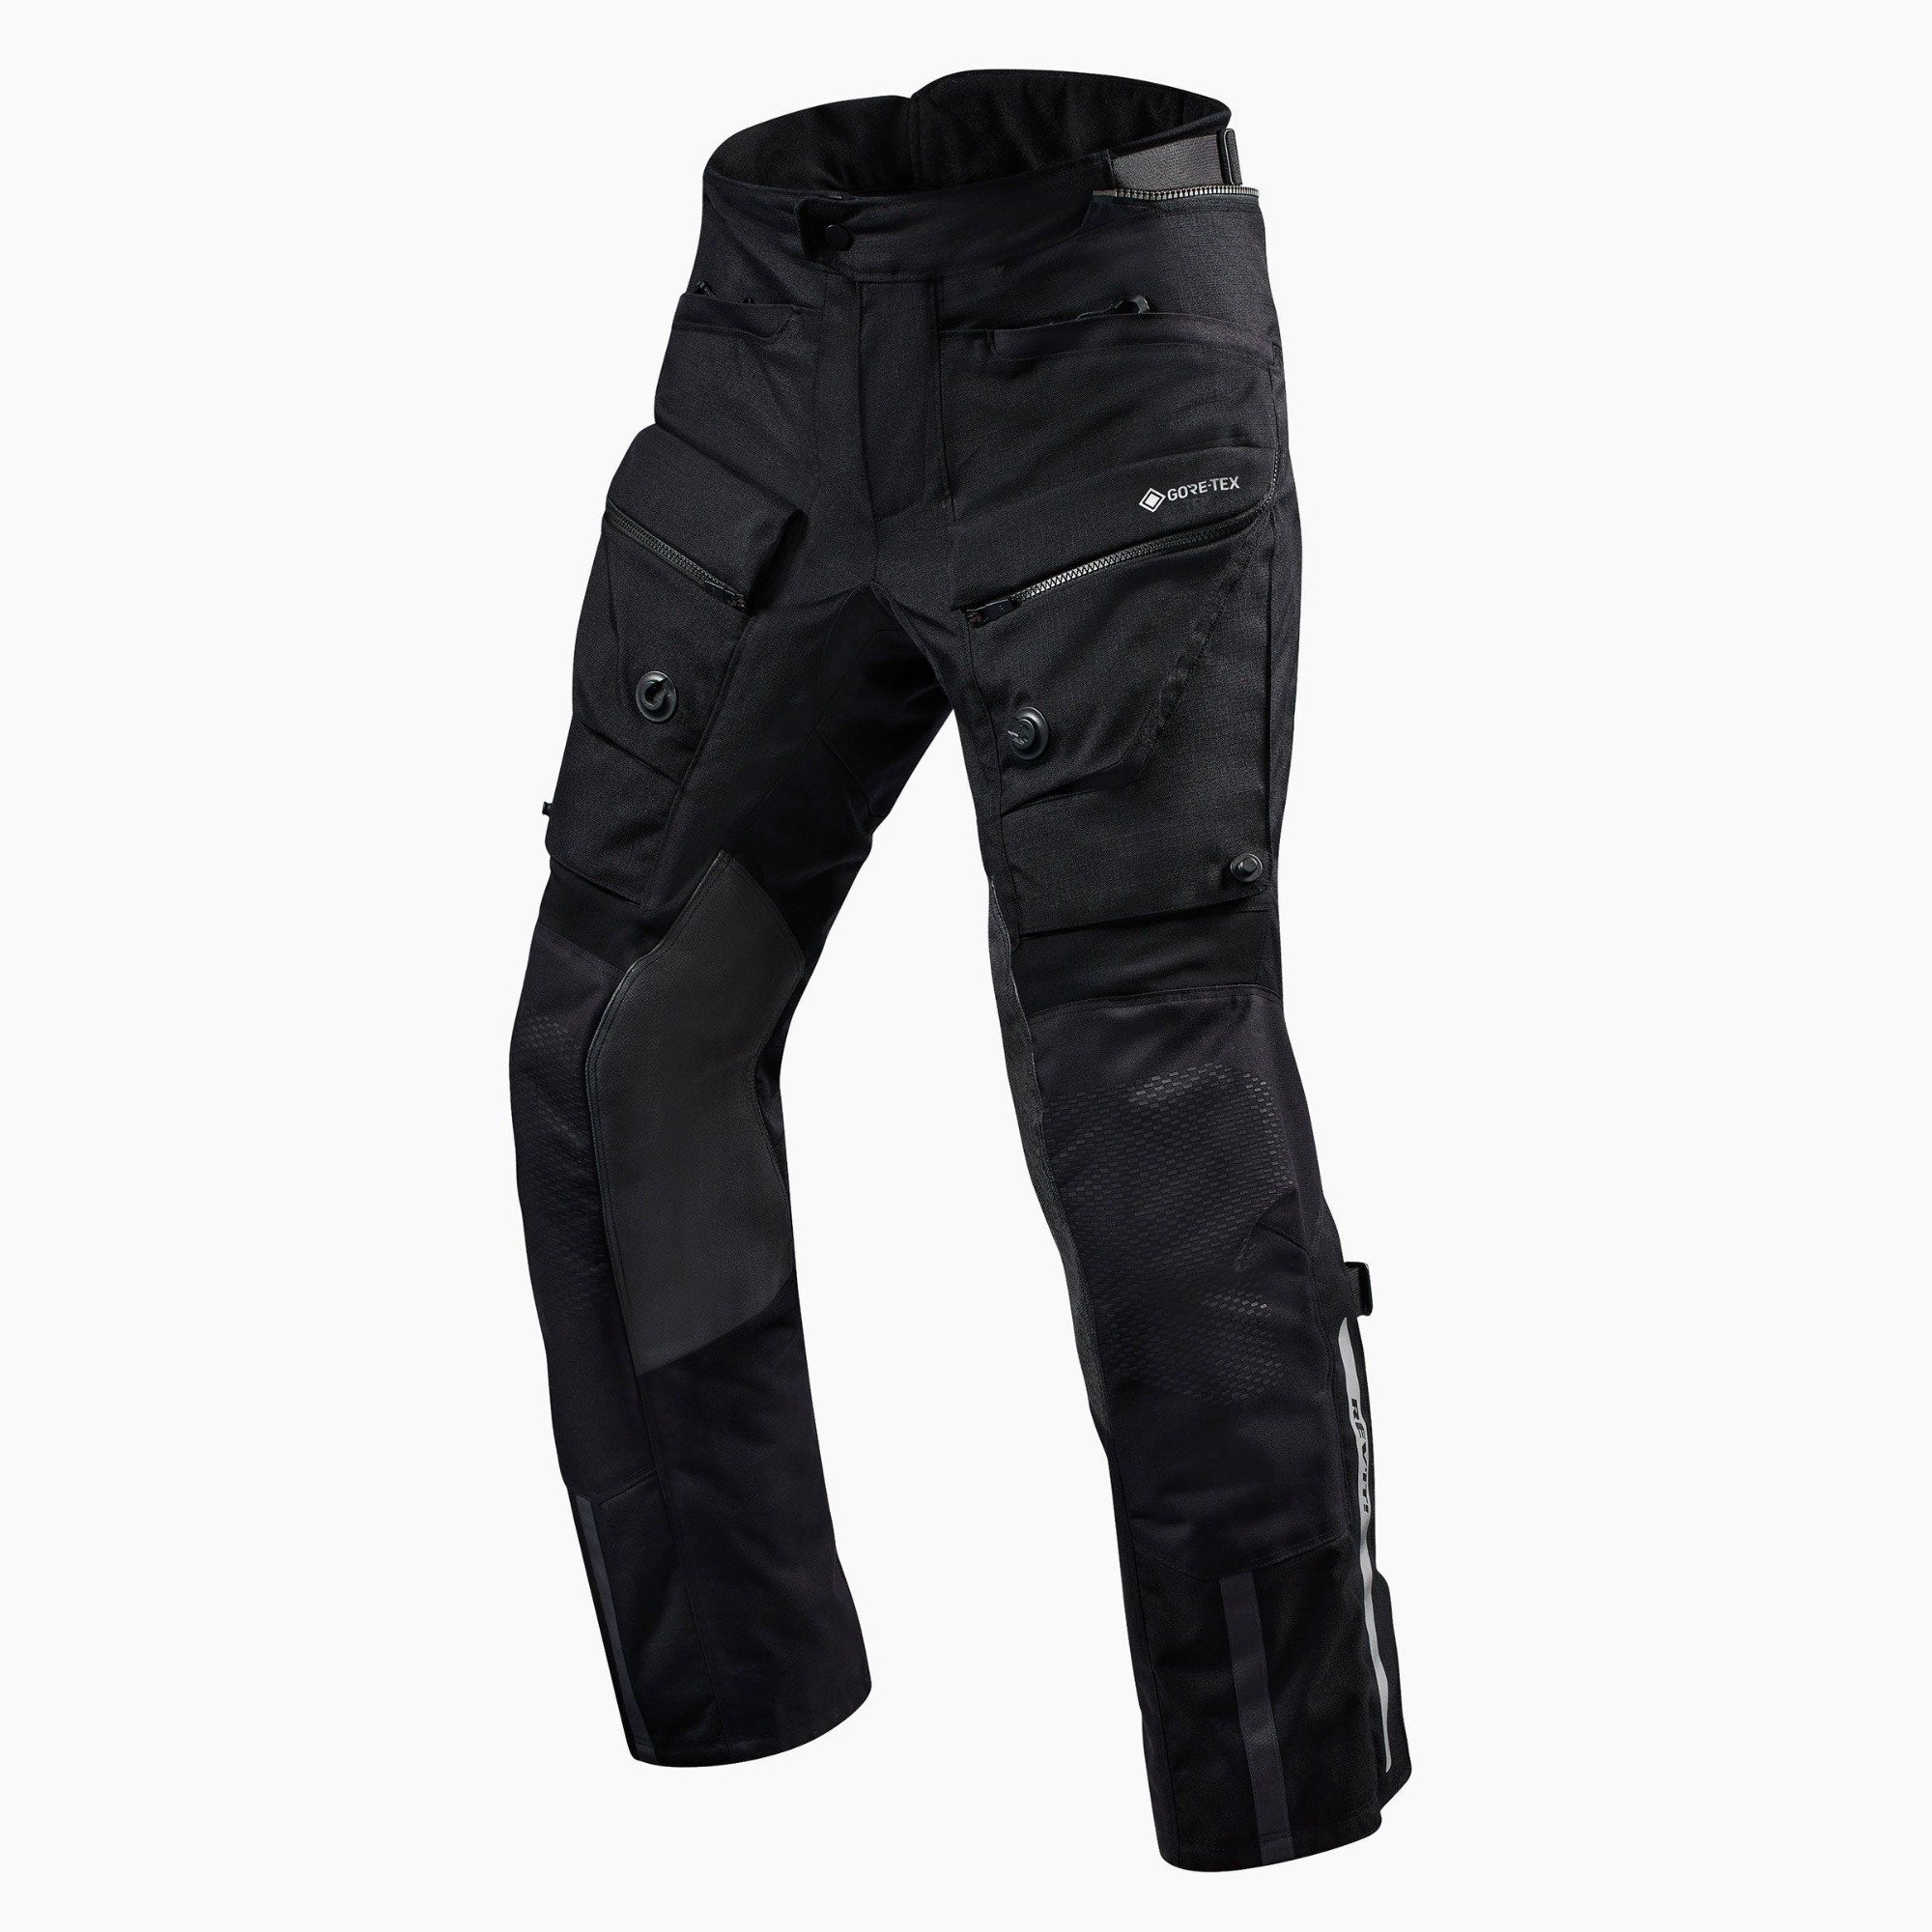 Image of REV'IT! Trousers Defender 3 GTX Black Standard Motorcycle Pants Size L EN